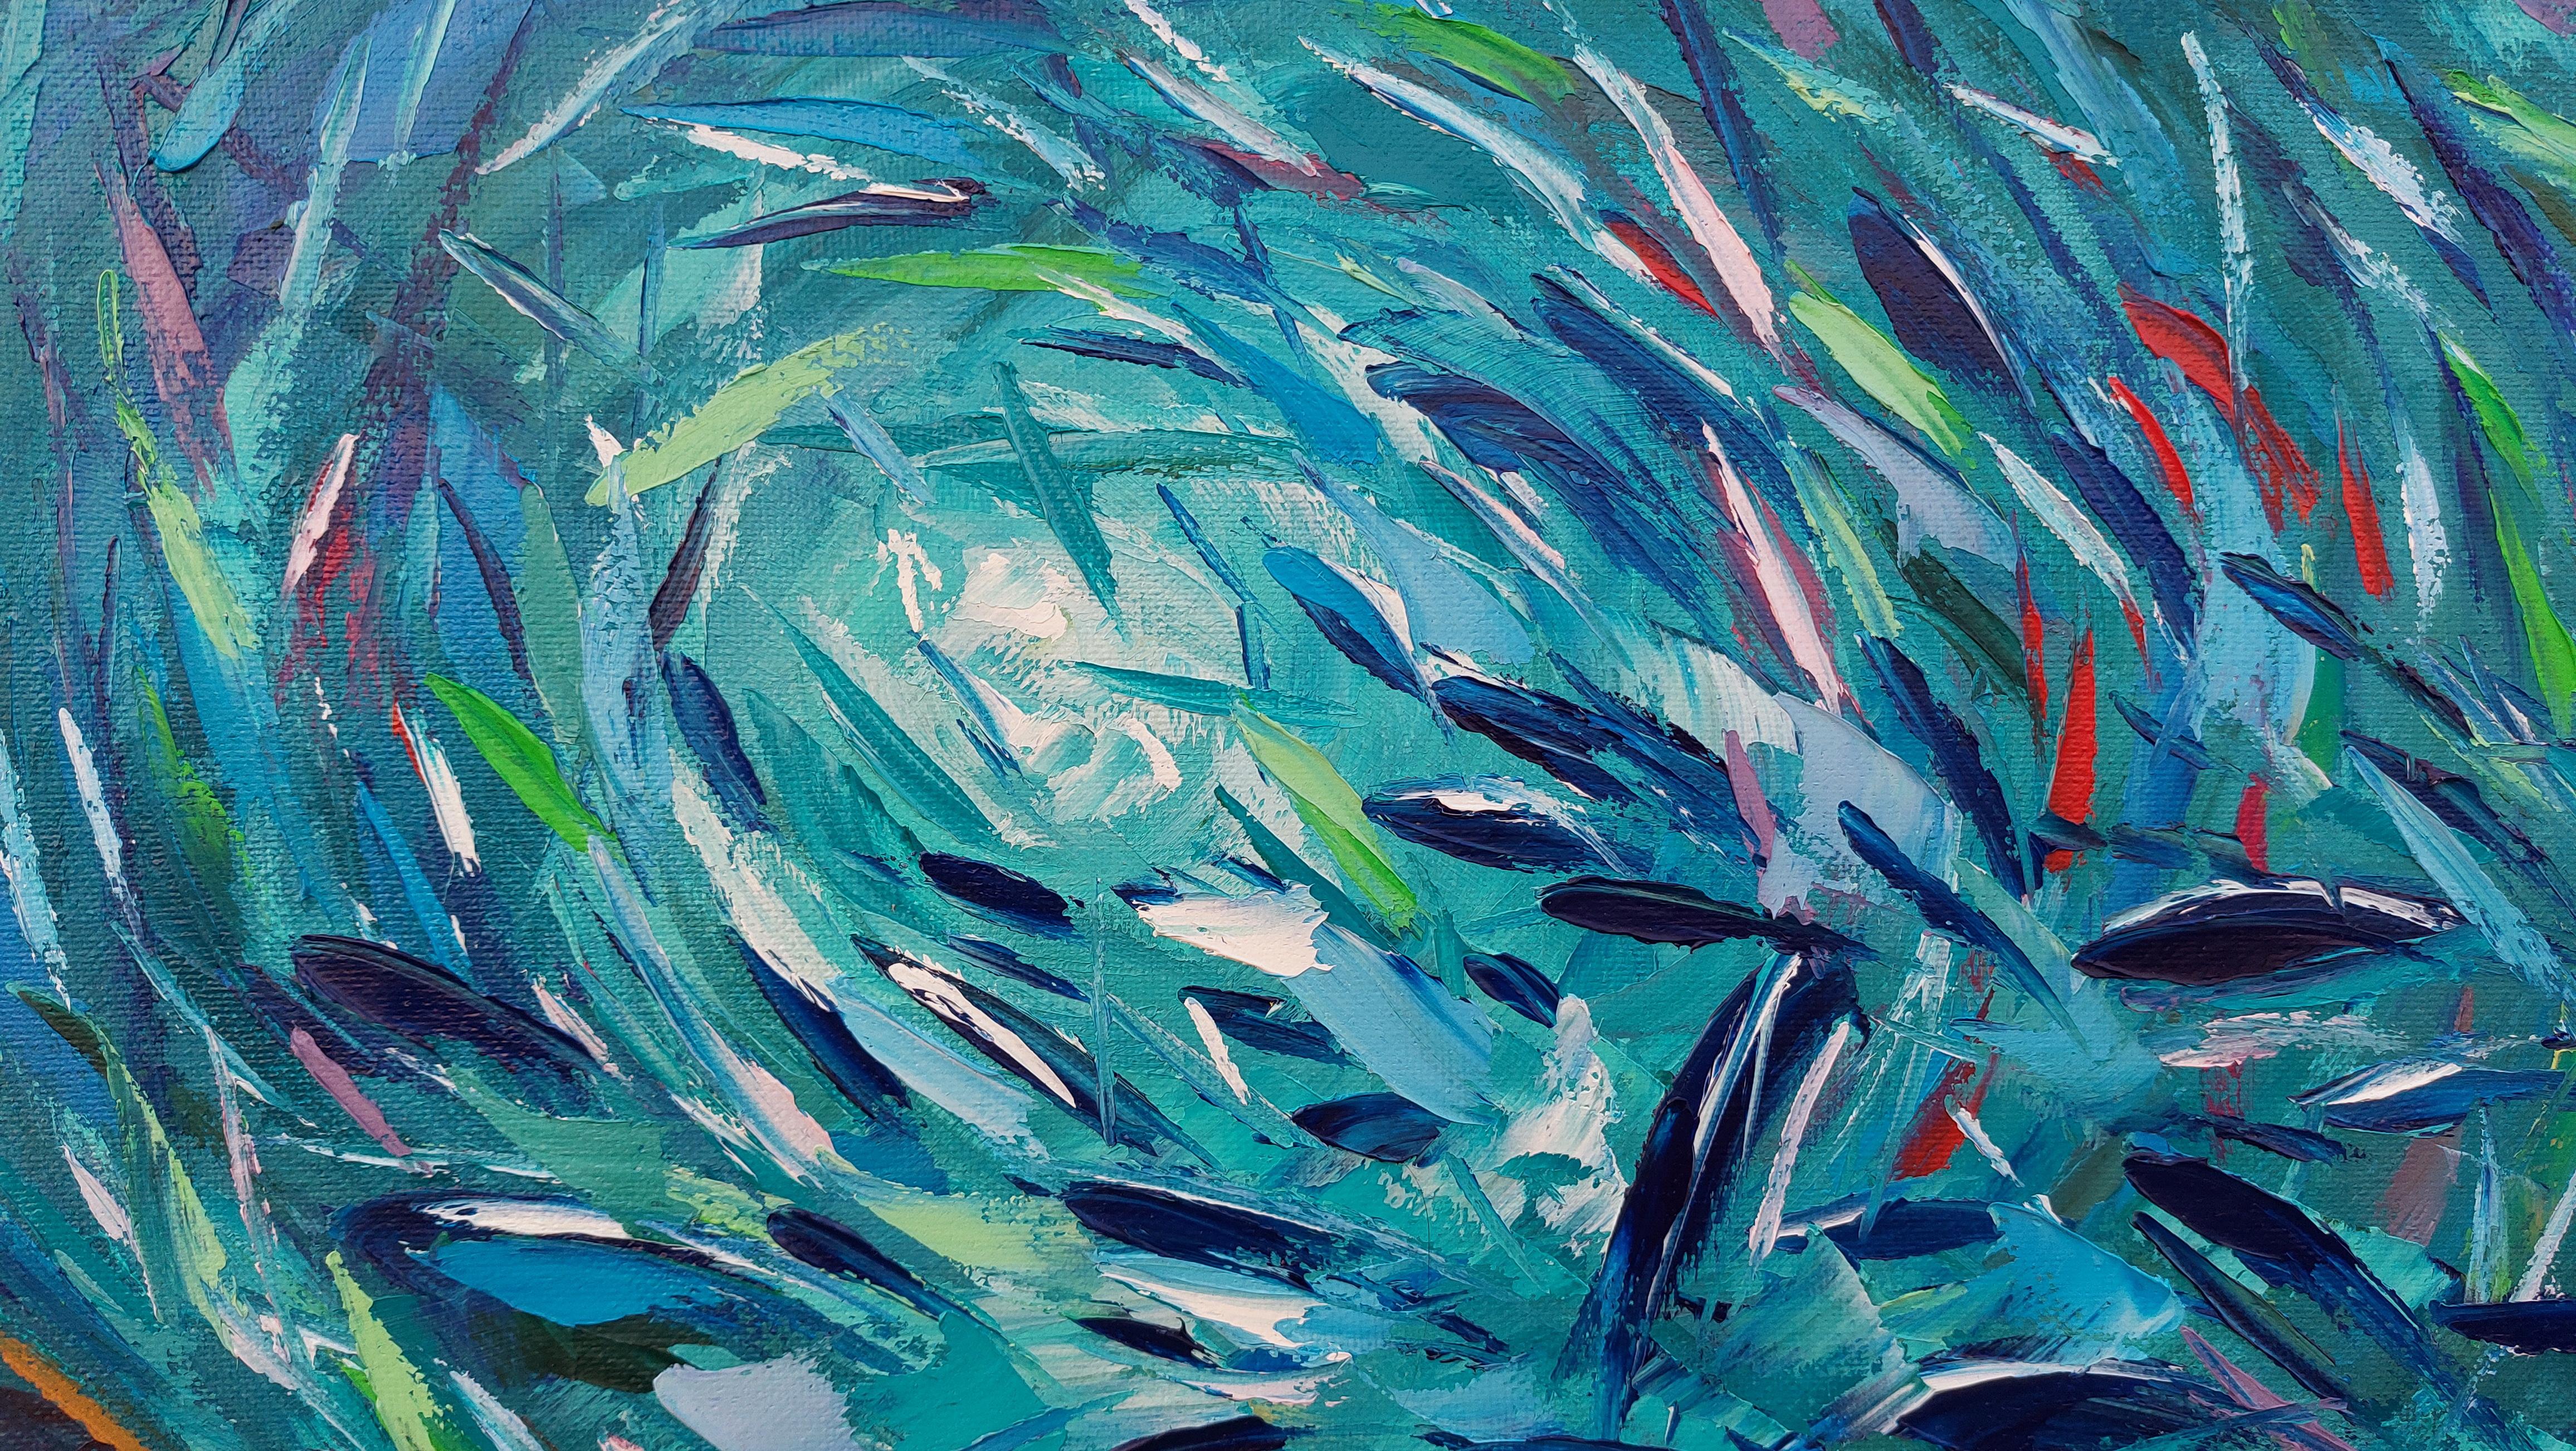 Abstract Fish painting by Olga Nikitina.
* Title: Hawaii Fish
* Size: 40 x 50 cm 16x20